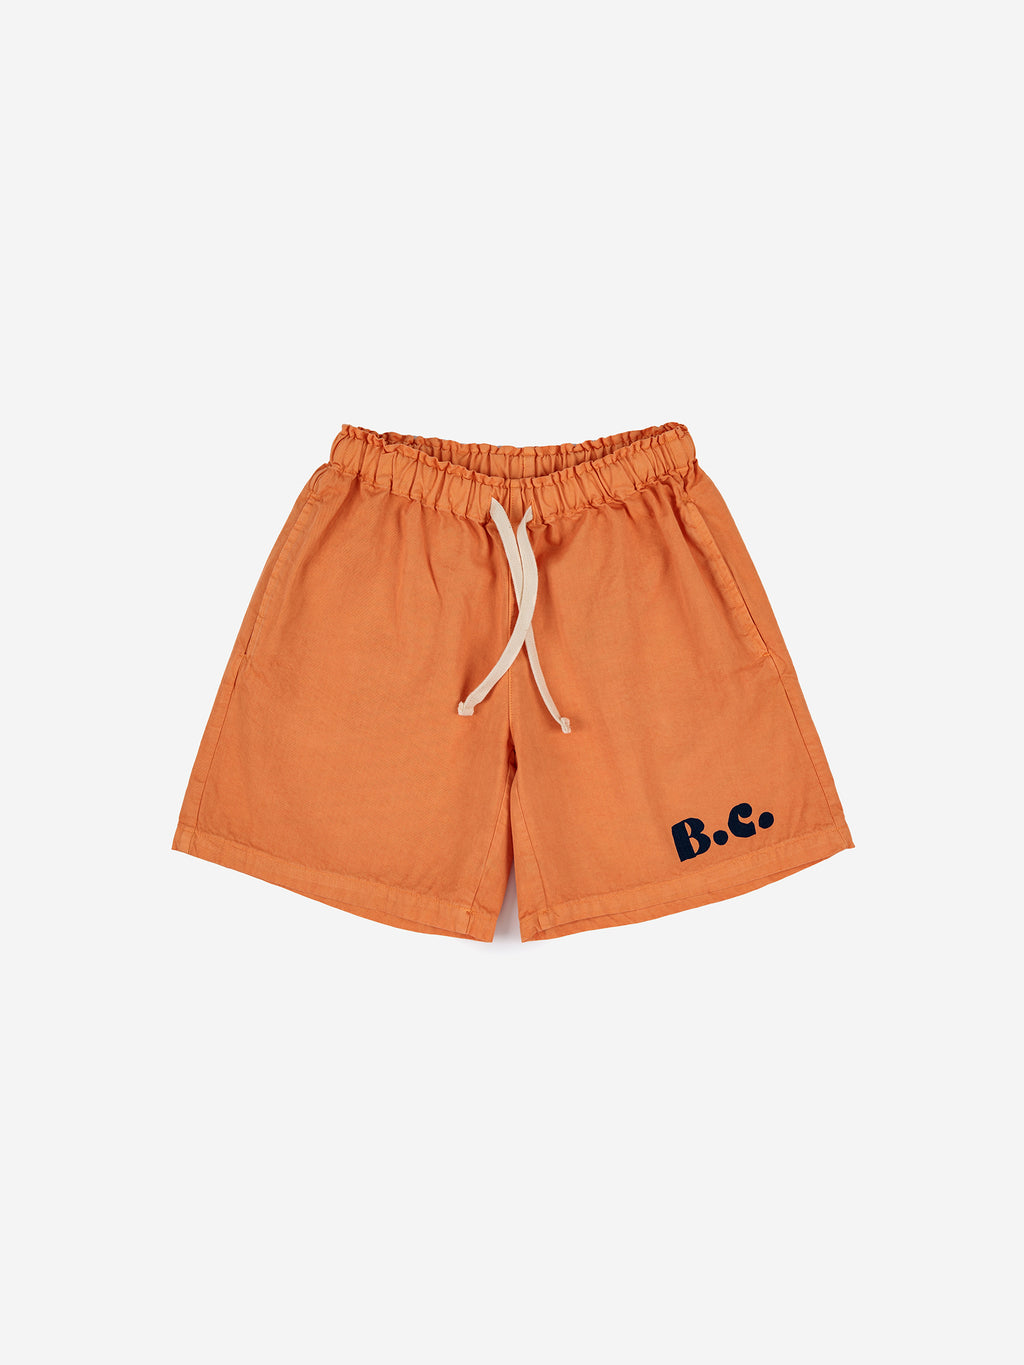 Bobo Choses B.C Woven Shorts